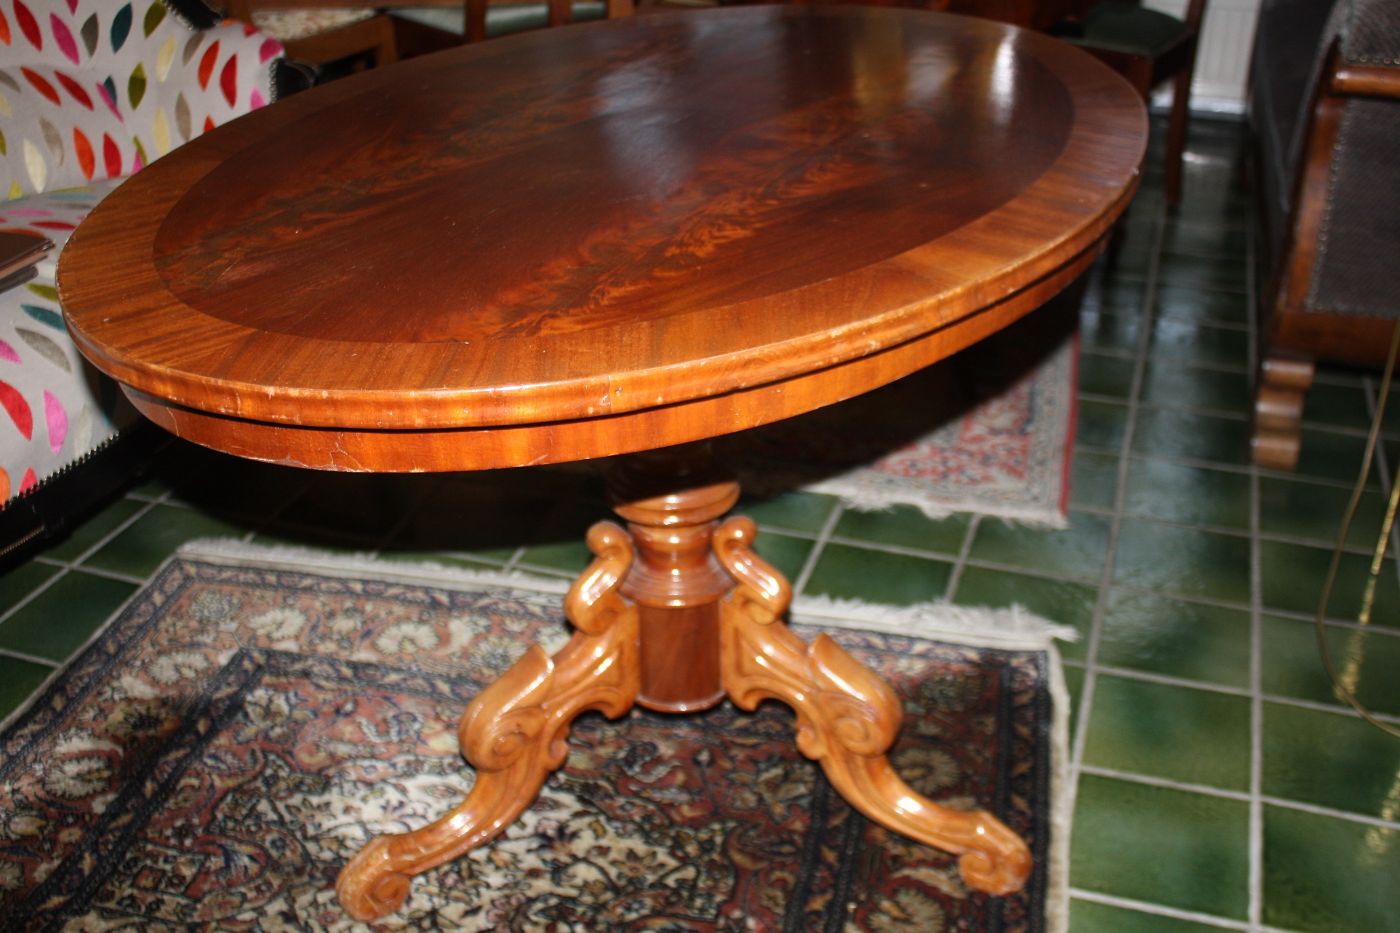 A late 19th century oval walnut burl wood veneer center table